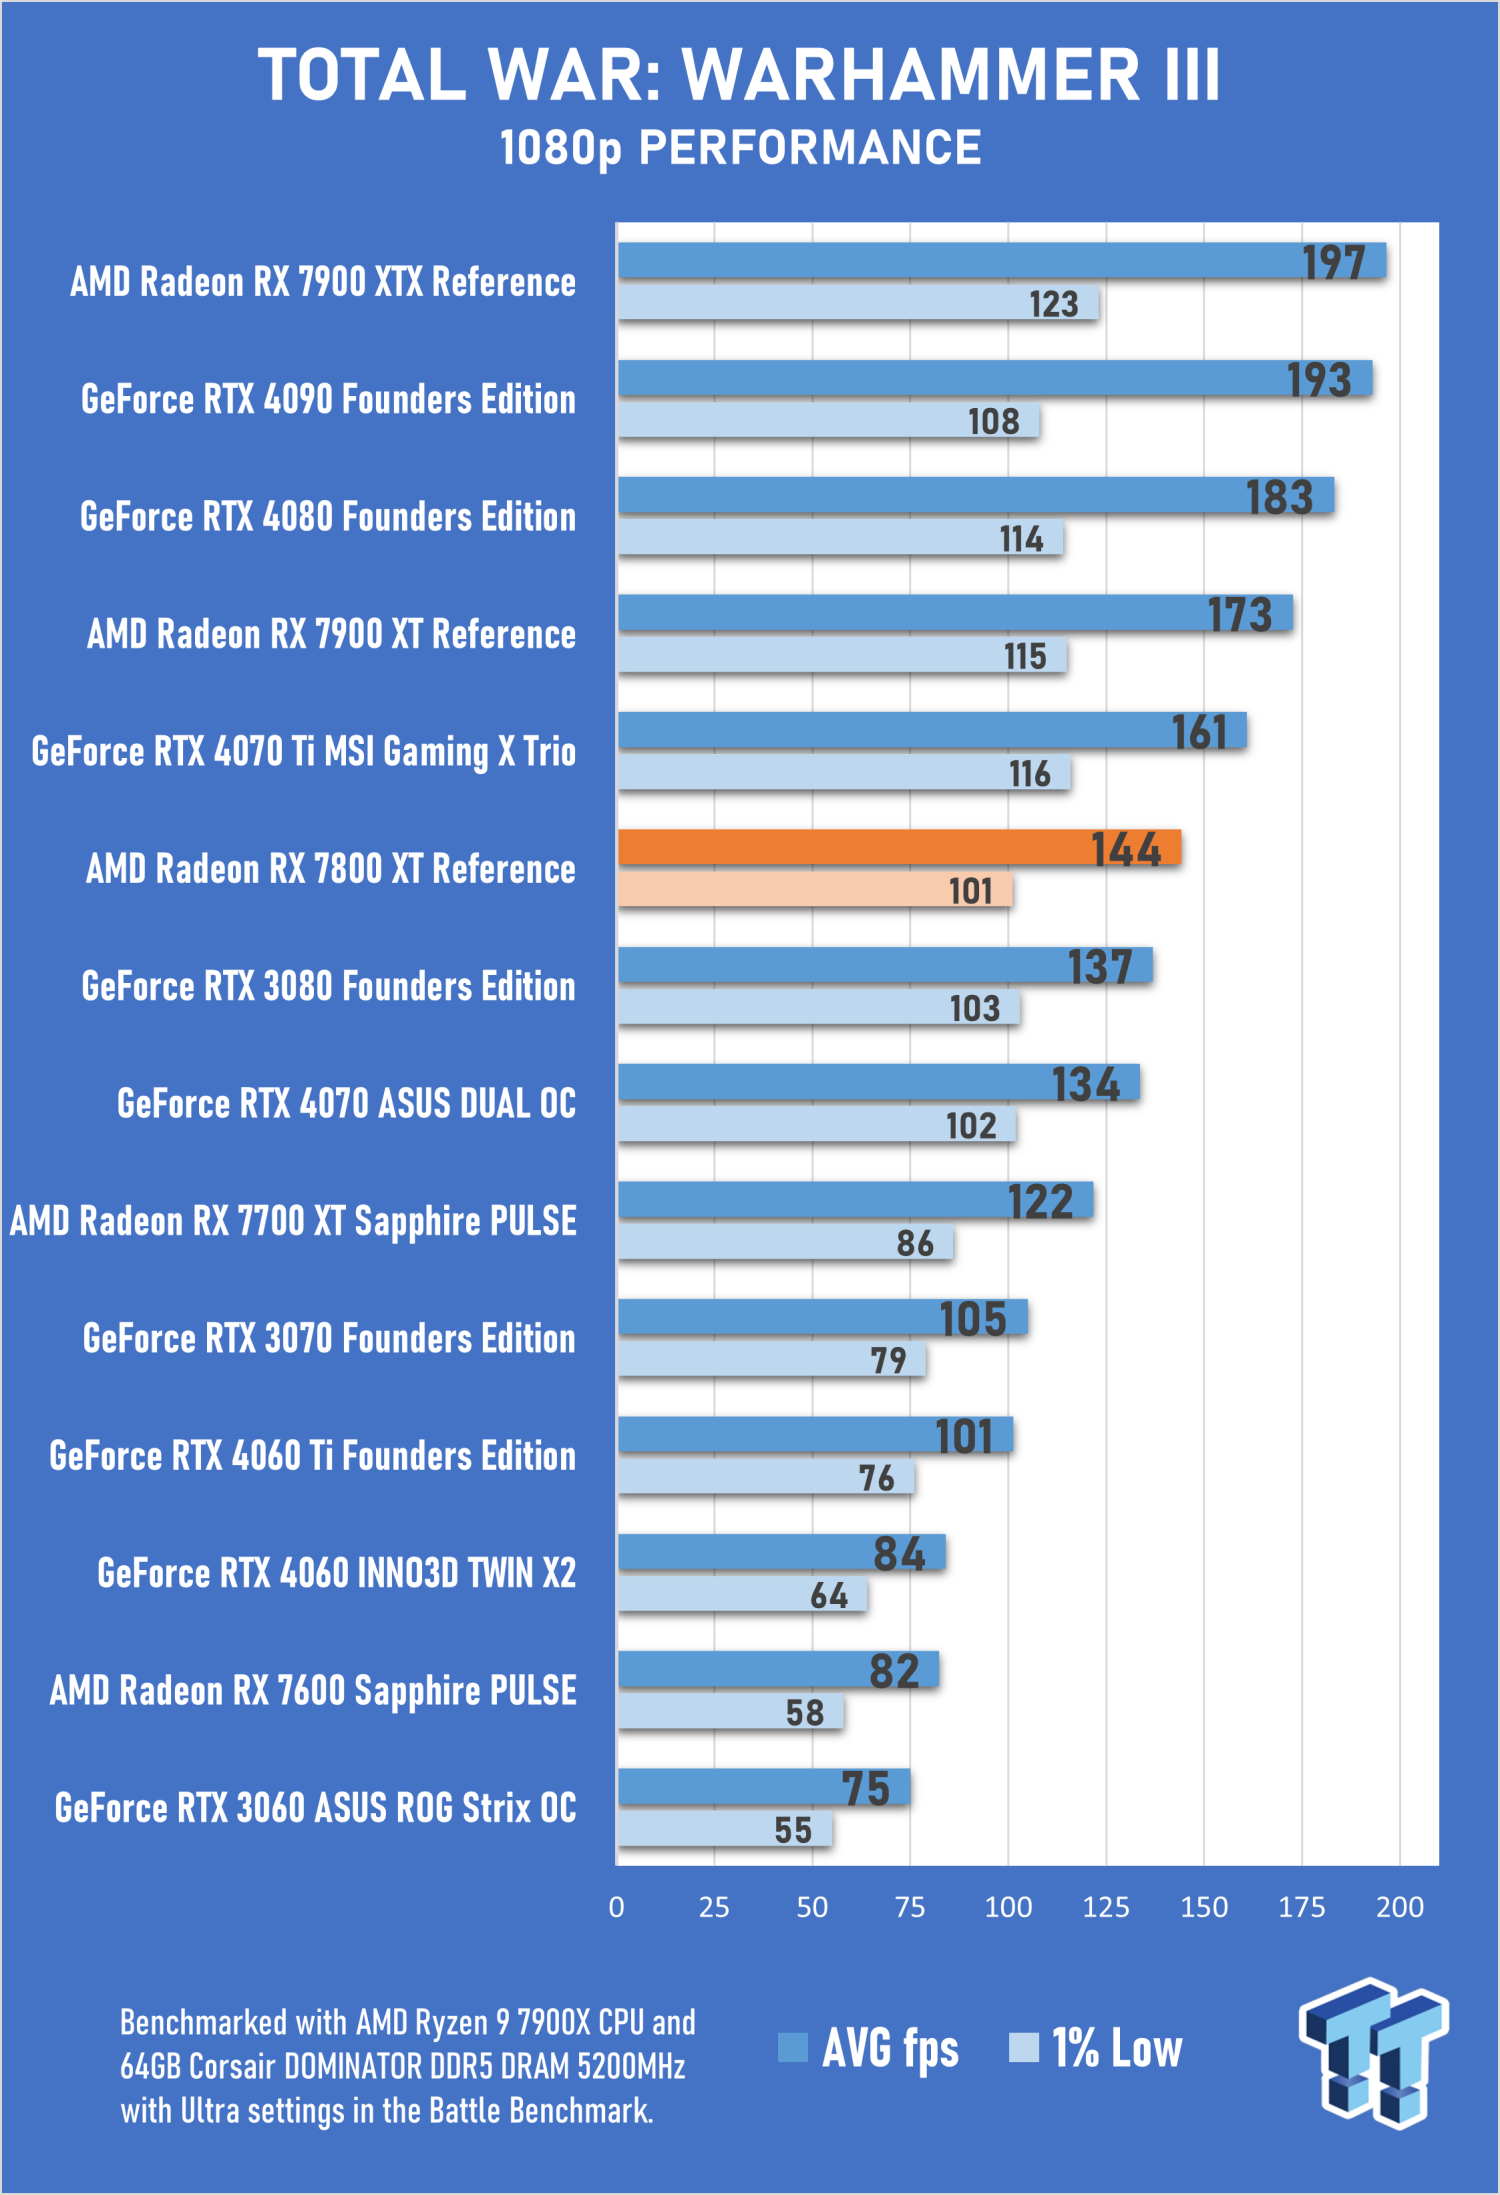 Gamers Nexus] AMD Radeon RX 7800 XT GPU Review and Benchmarks vs